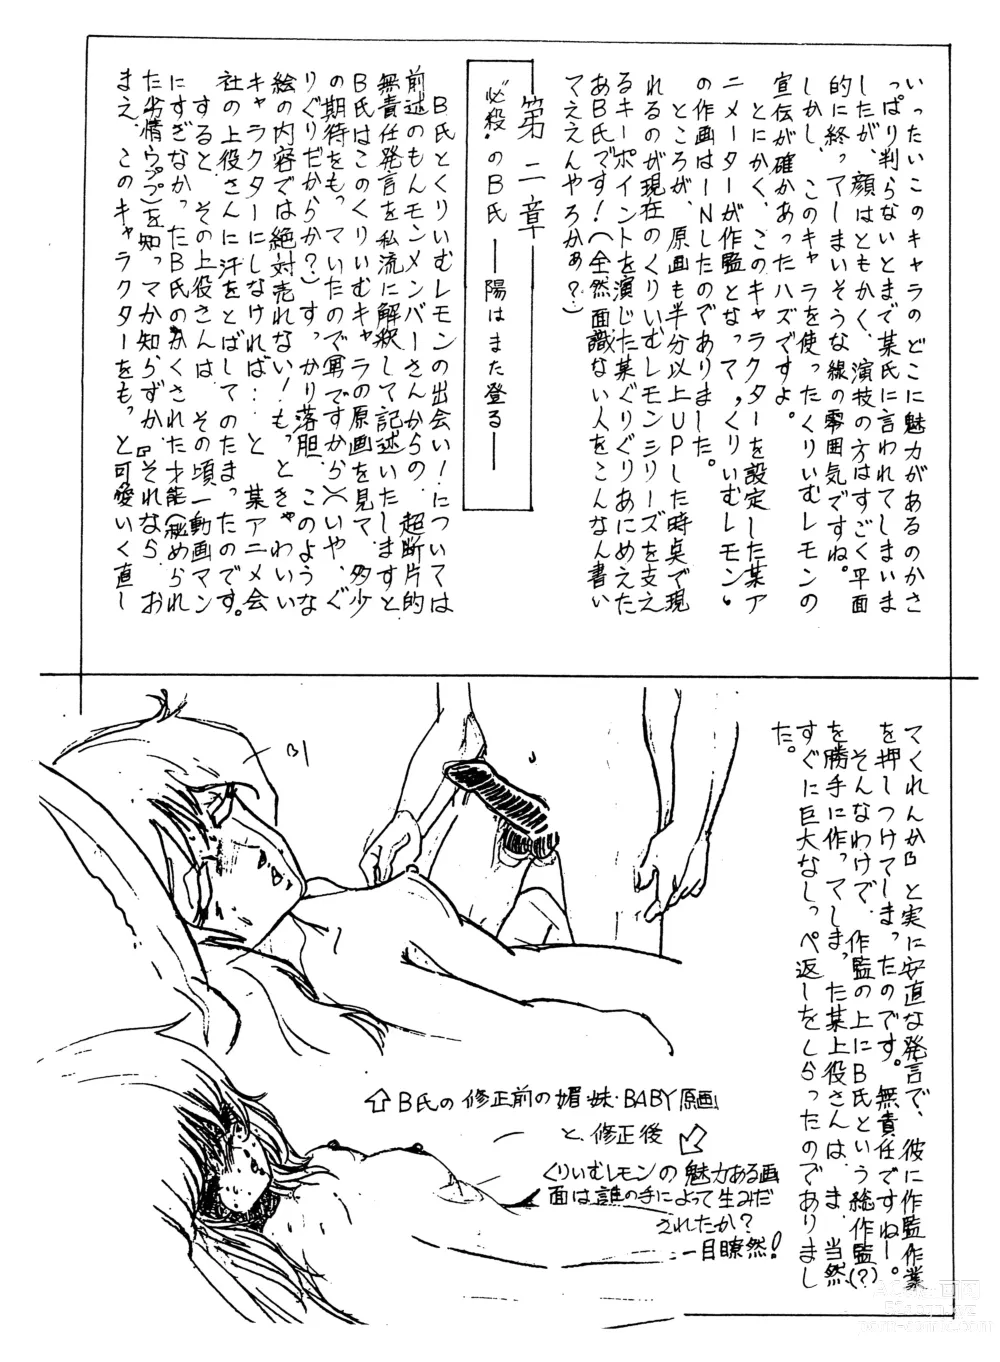 Page 66 of doujinshi Peachpai Vol.02 Cream Lemon Collection of Original Drawings